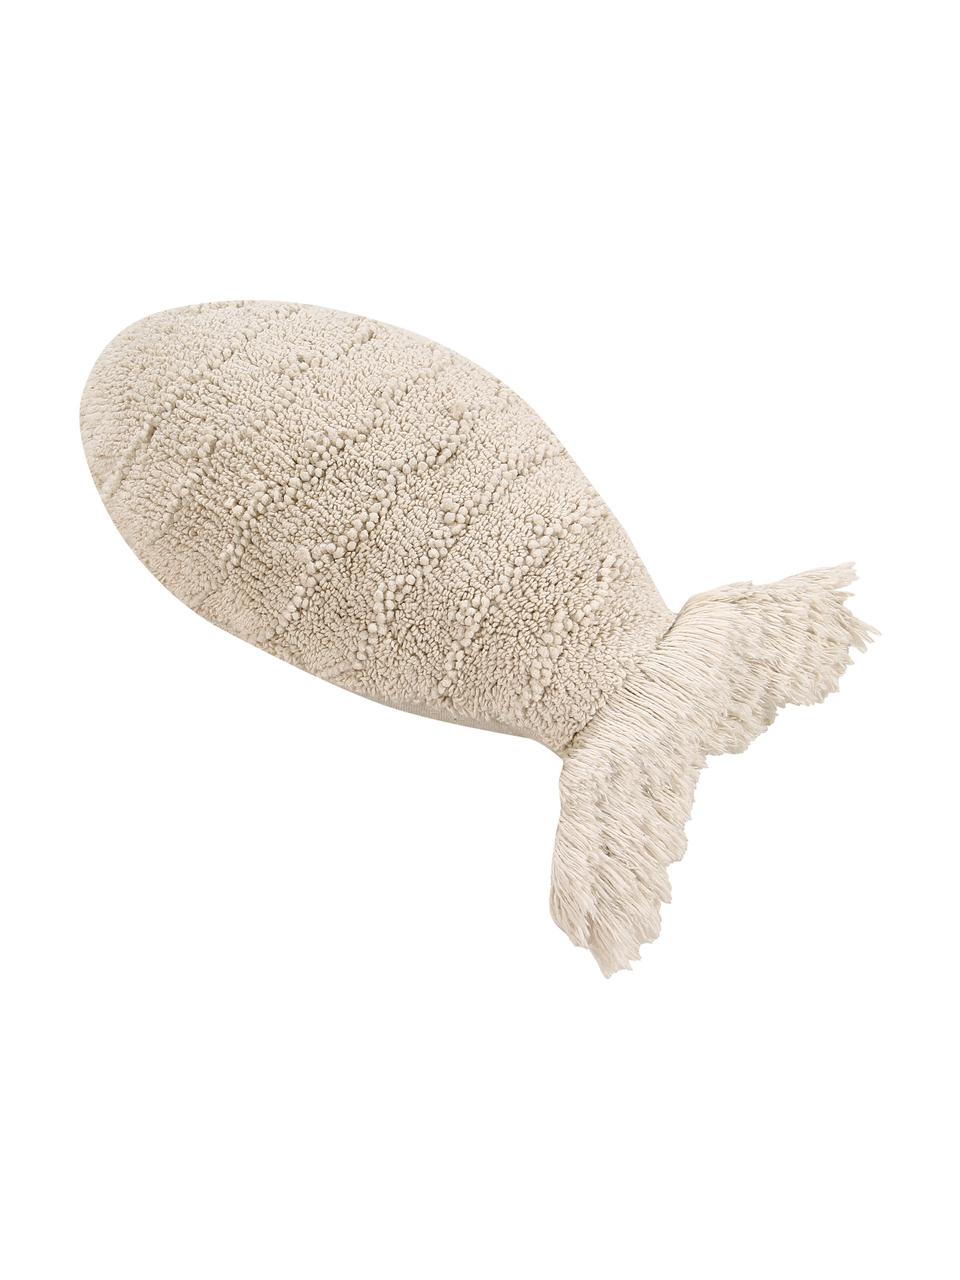 Cojín Baby Fish, con relleno, Funda: 97% algodón, 3% algodón r, Beige, An 30 x L 60 cm